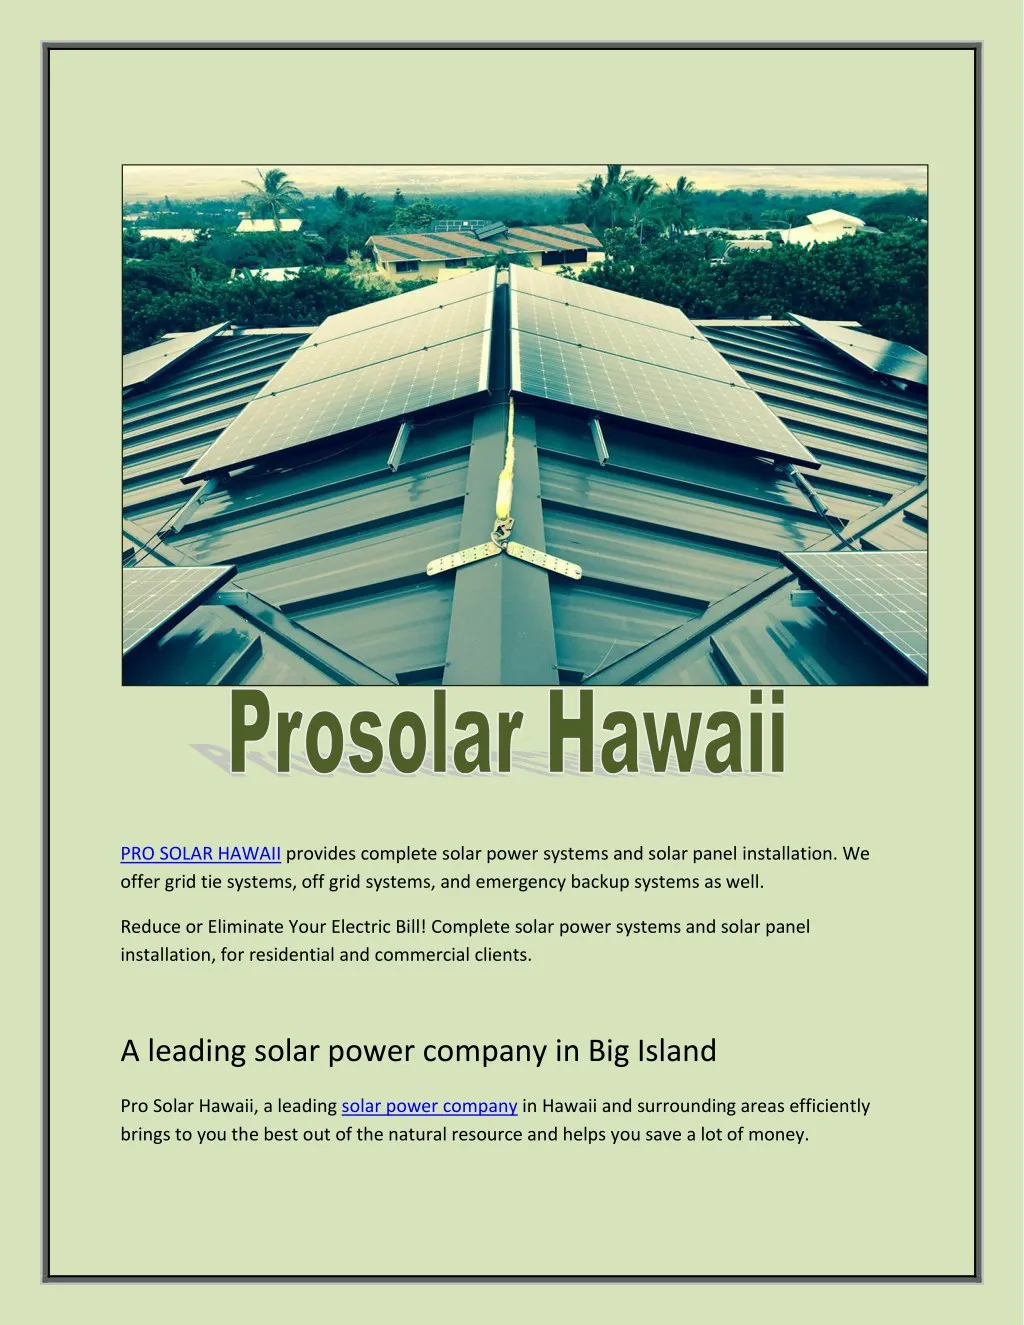 pro solar hawaii provides complete solar power